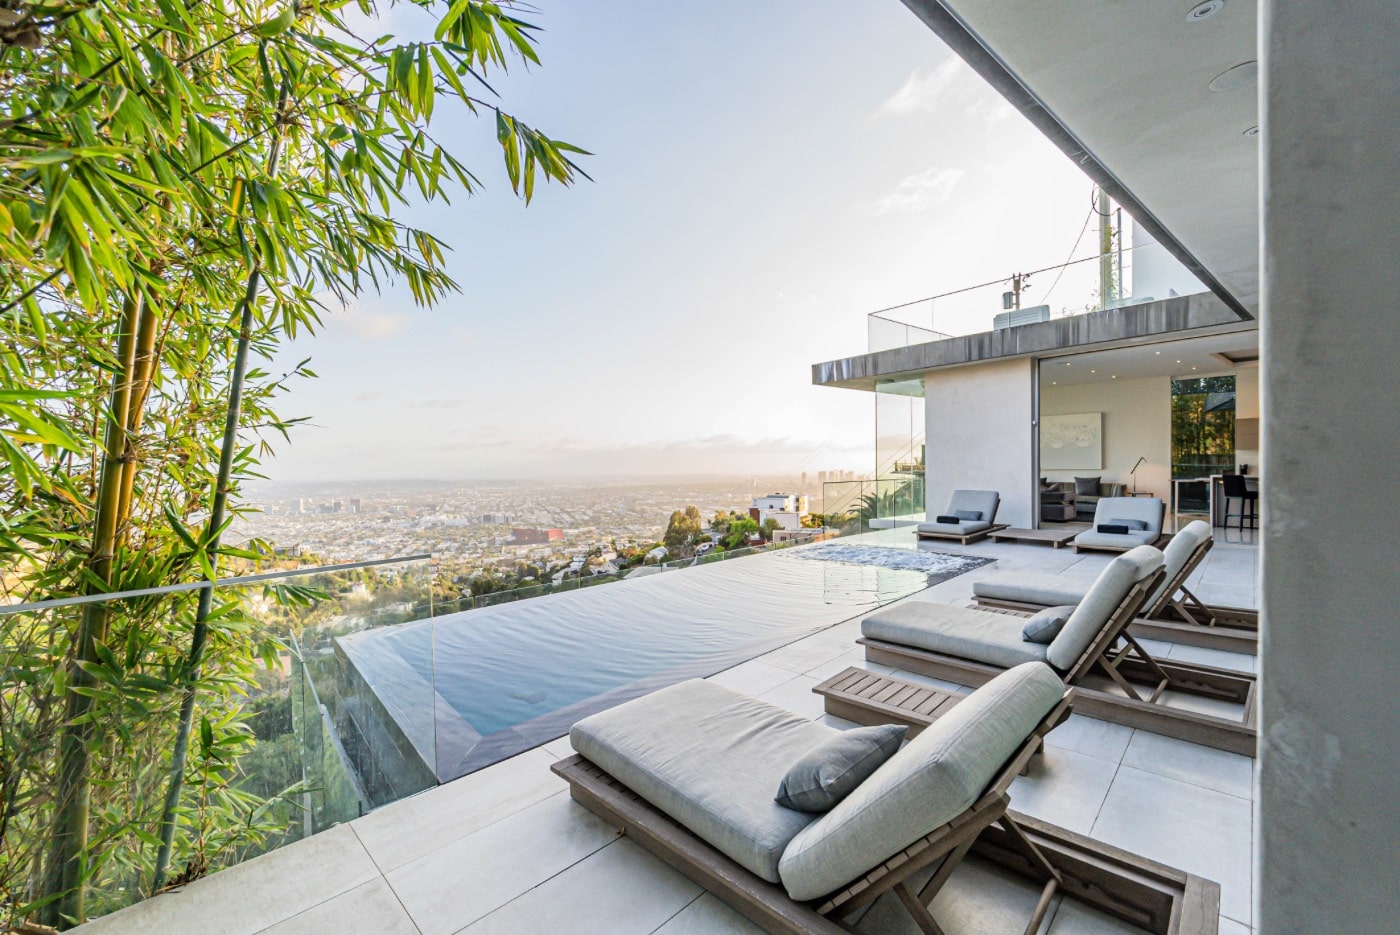 Villa Plaza | Mansions for rent Los Angeles | Haute Retreats